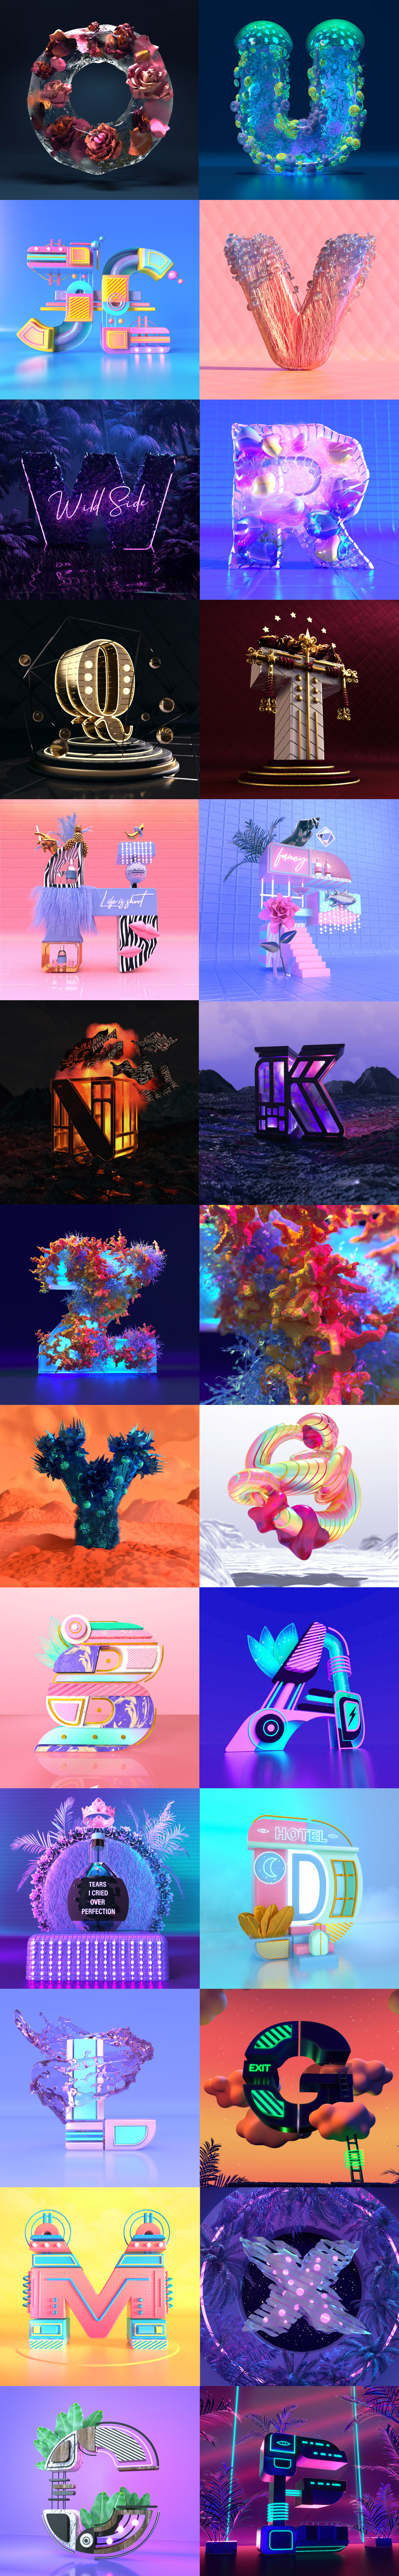 36daysoftype 36days 3D 3DType neon cinema4d 3Dillustration 3dart